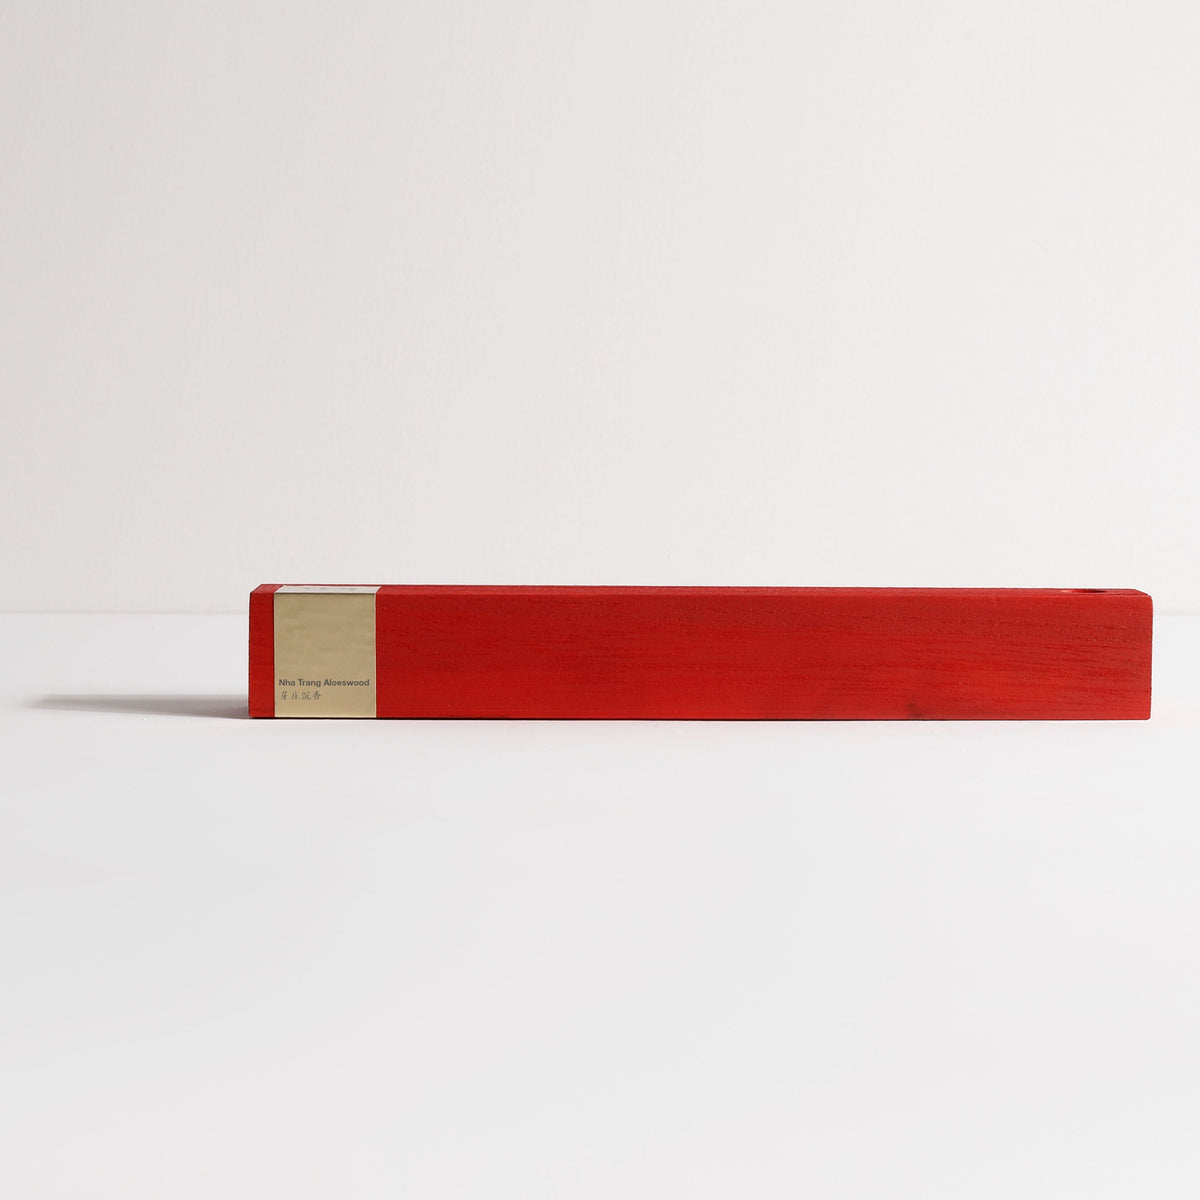 Nha Trang Aloeswood - Incense sticks-Kin Objects